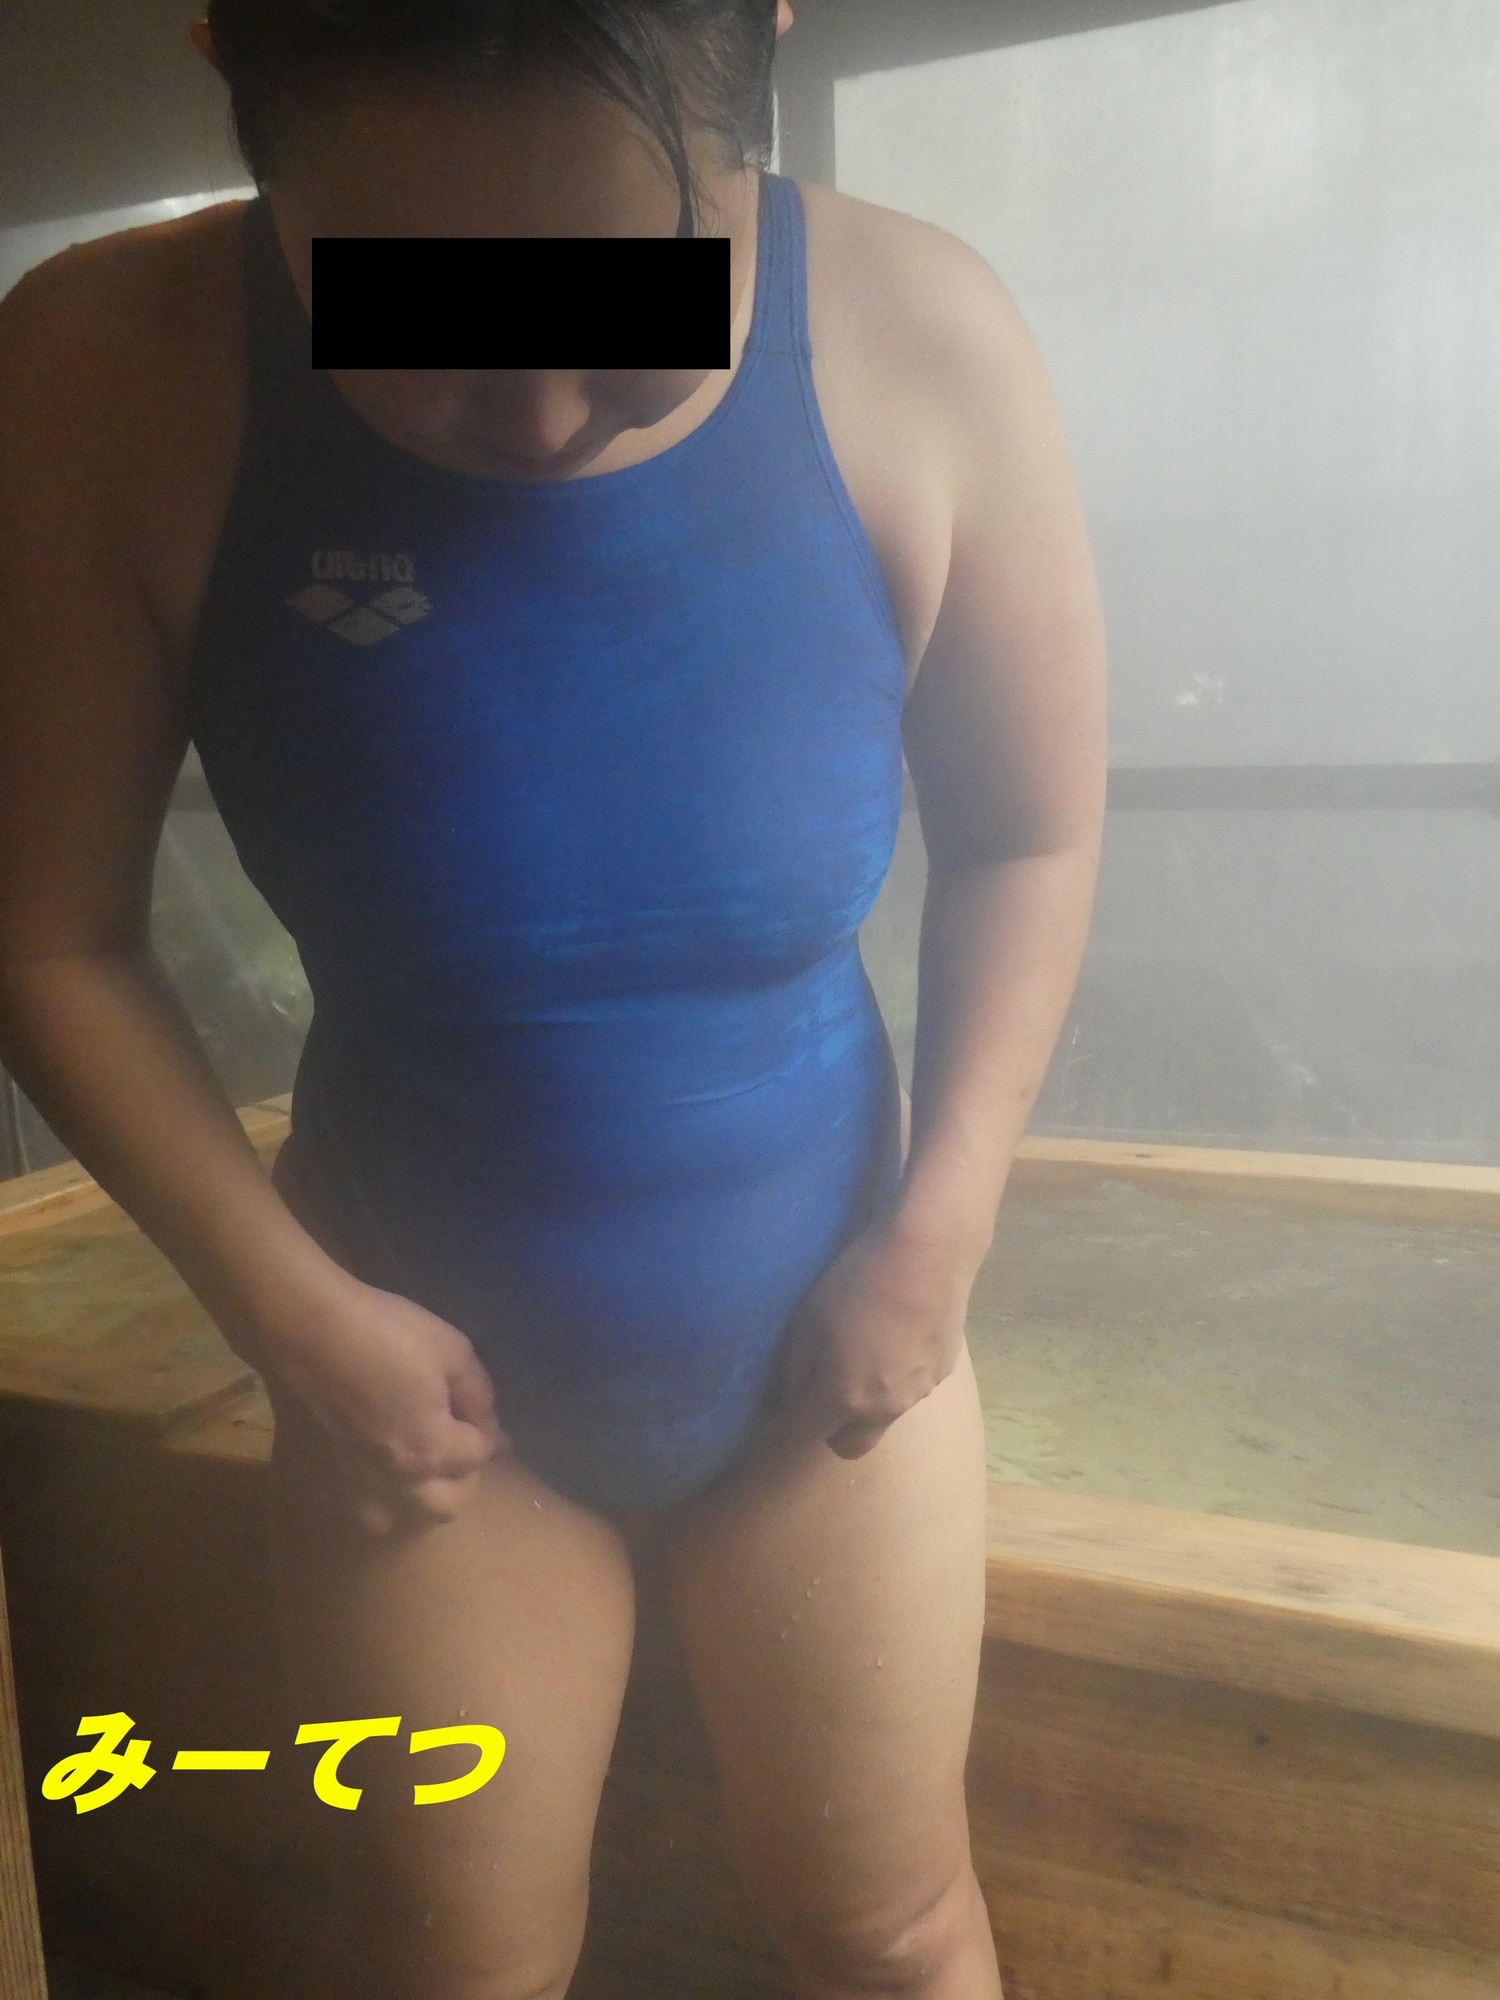 Soft 競泳水着画像掲示板へ投稿されたみーてつ様のSoft 競泳水着画像 No.14879568600080